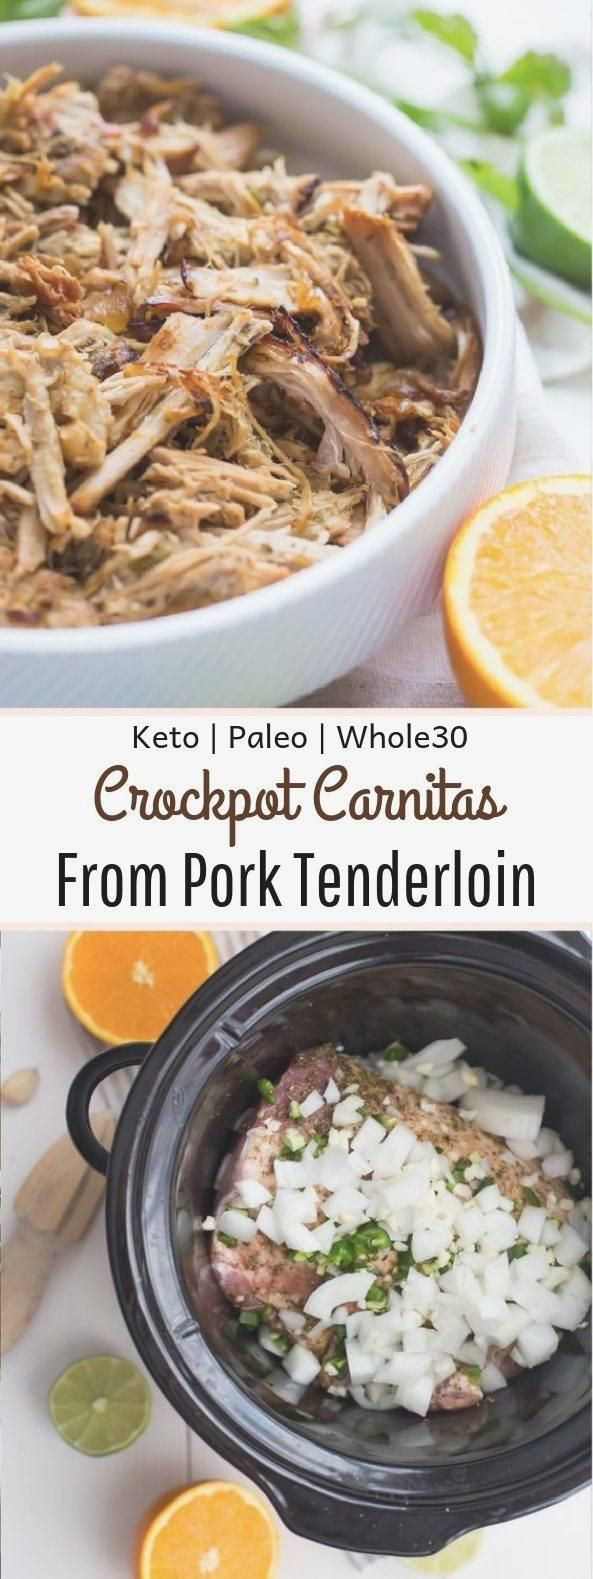 Crock Pot Keto Pork Tenderloin
 Crockpot Carnitas from Pork Tenderloin Paleo Whole30